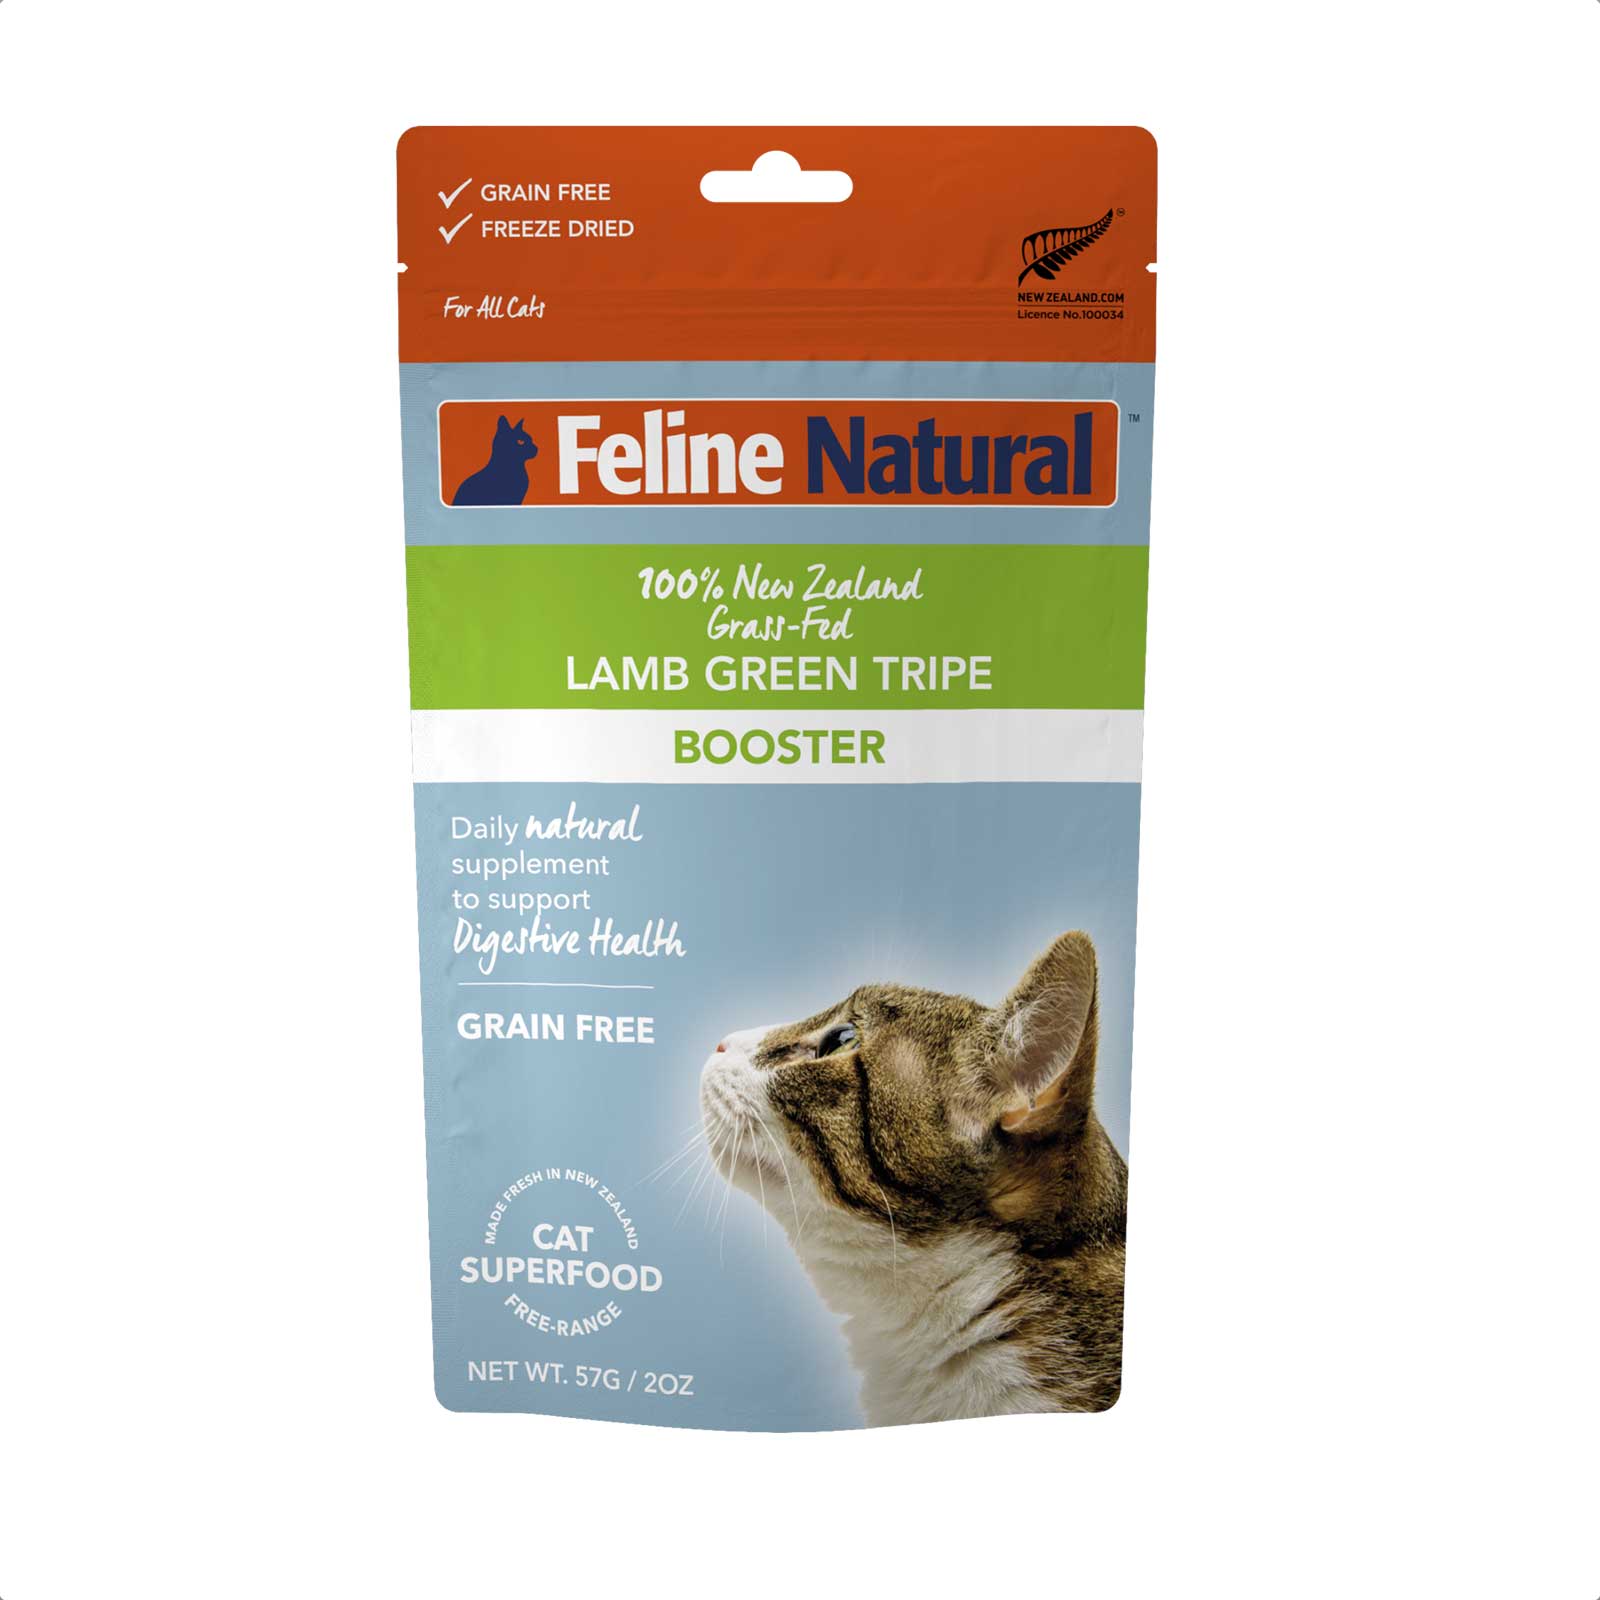 Feline Natural Cat Food Topper Lamb Green Tripe Booster